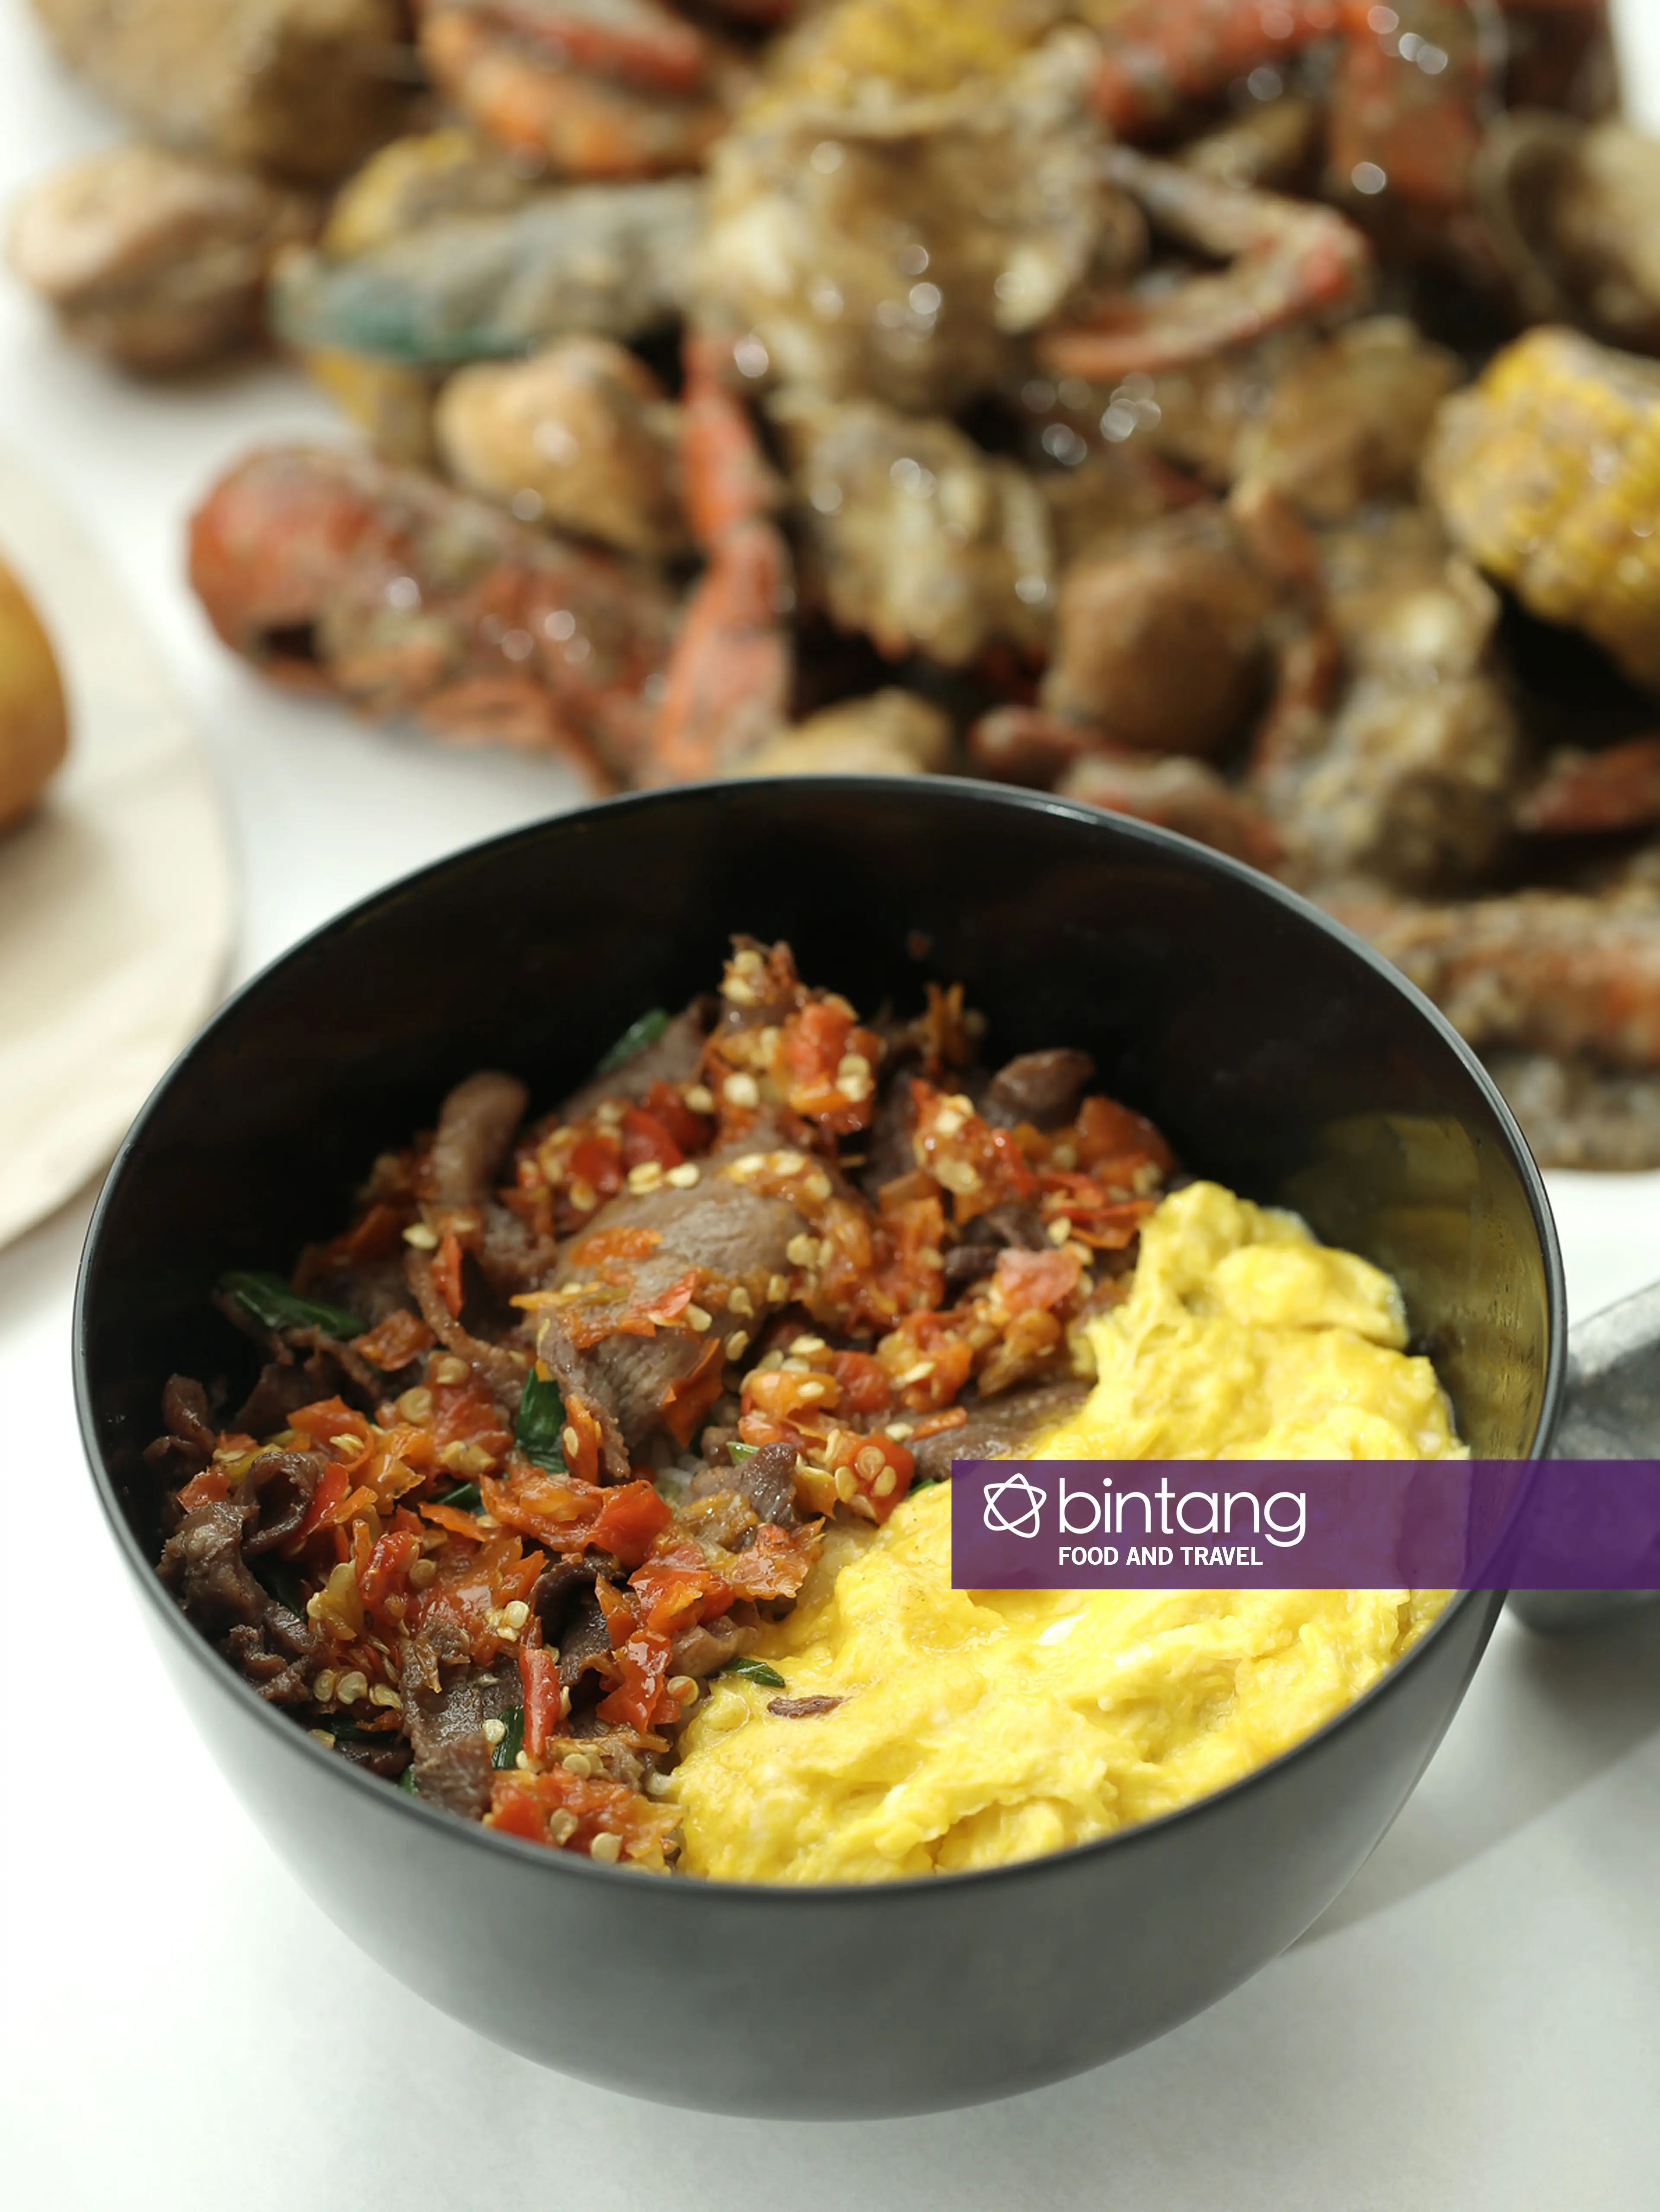 Gyu tan don rica with egg, menu Cranky Crab. (Daniel Kampua/Bintang.com)